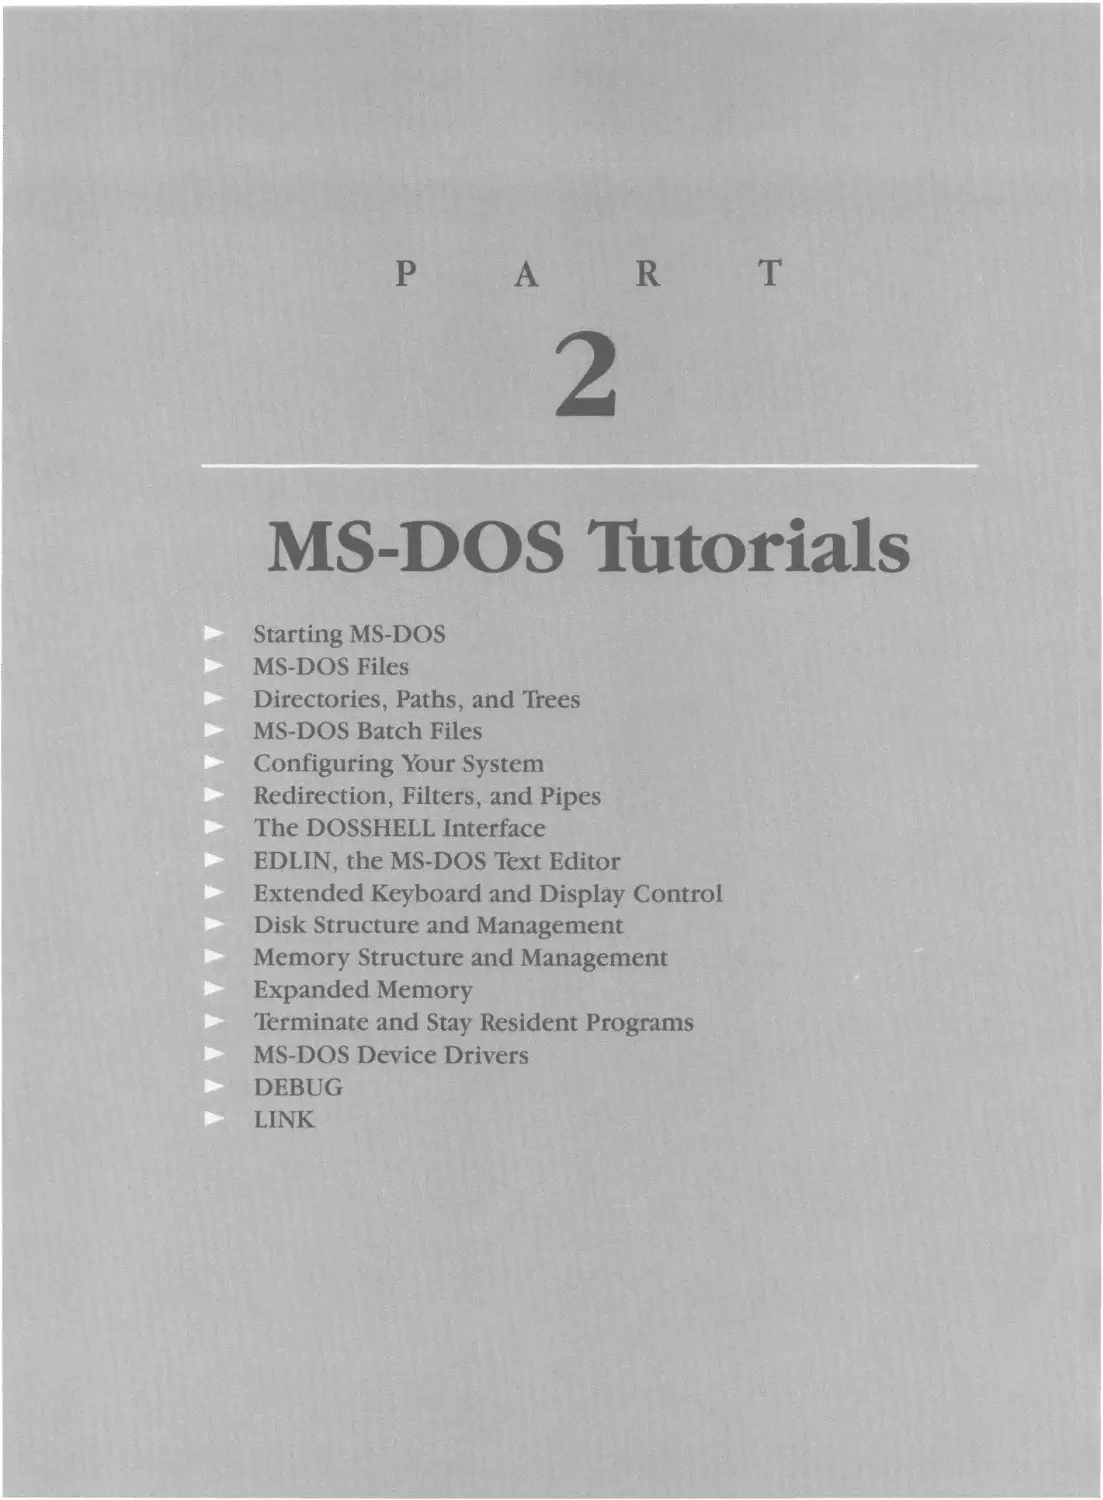 ---- PART 2 ---- MS-DOS Tutorials